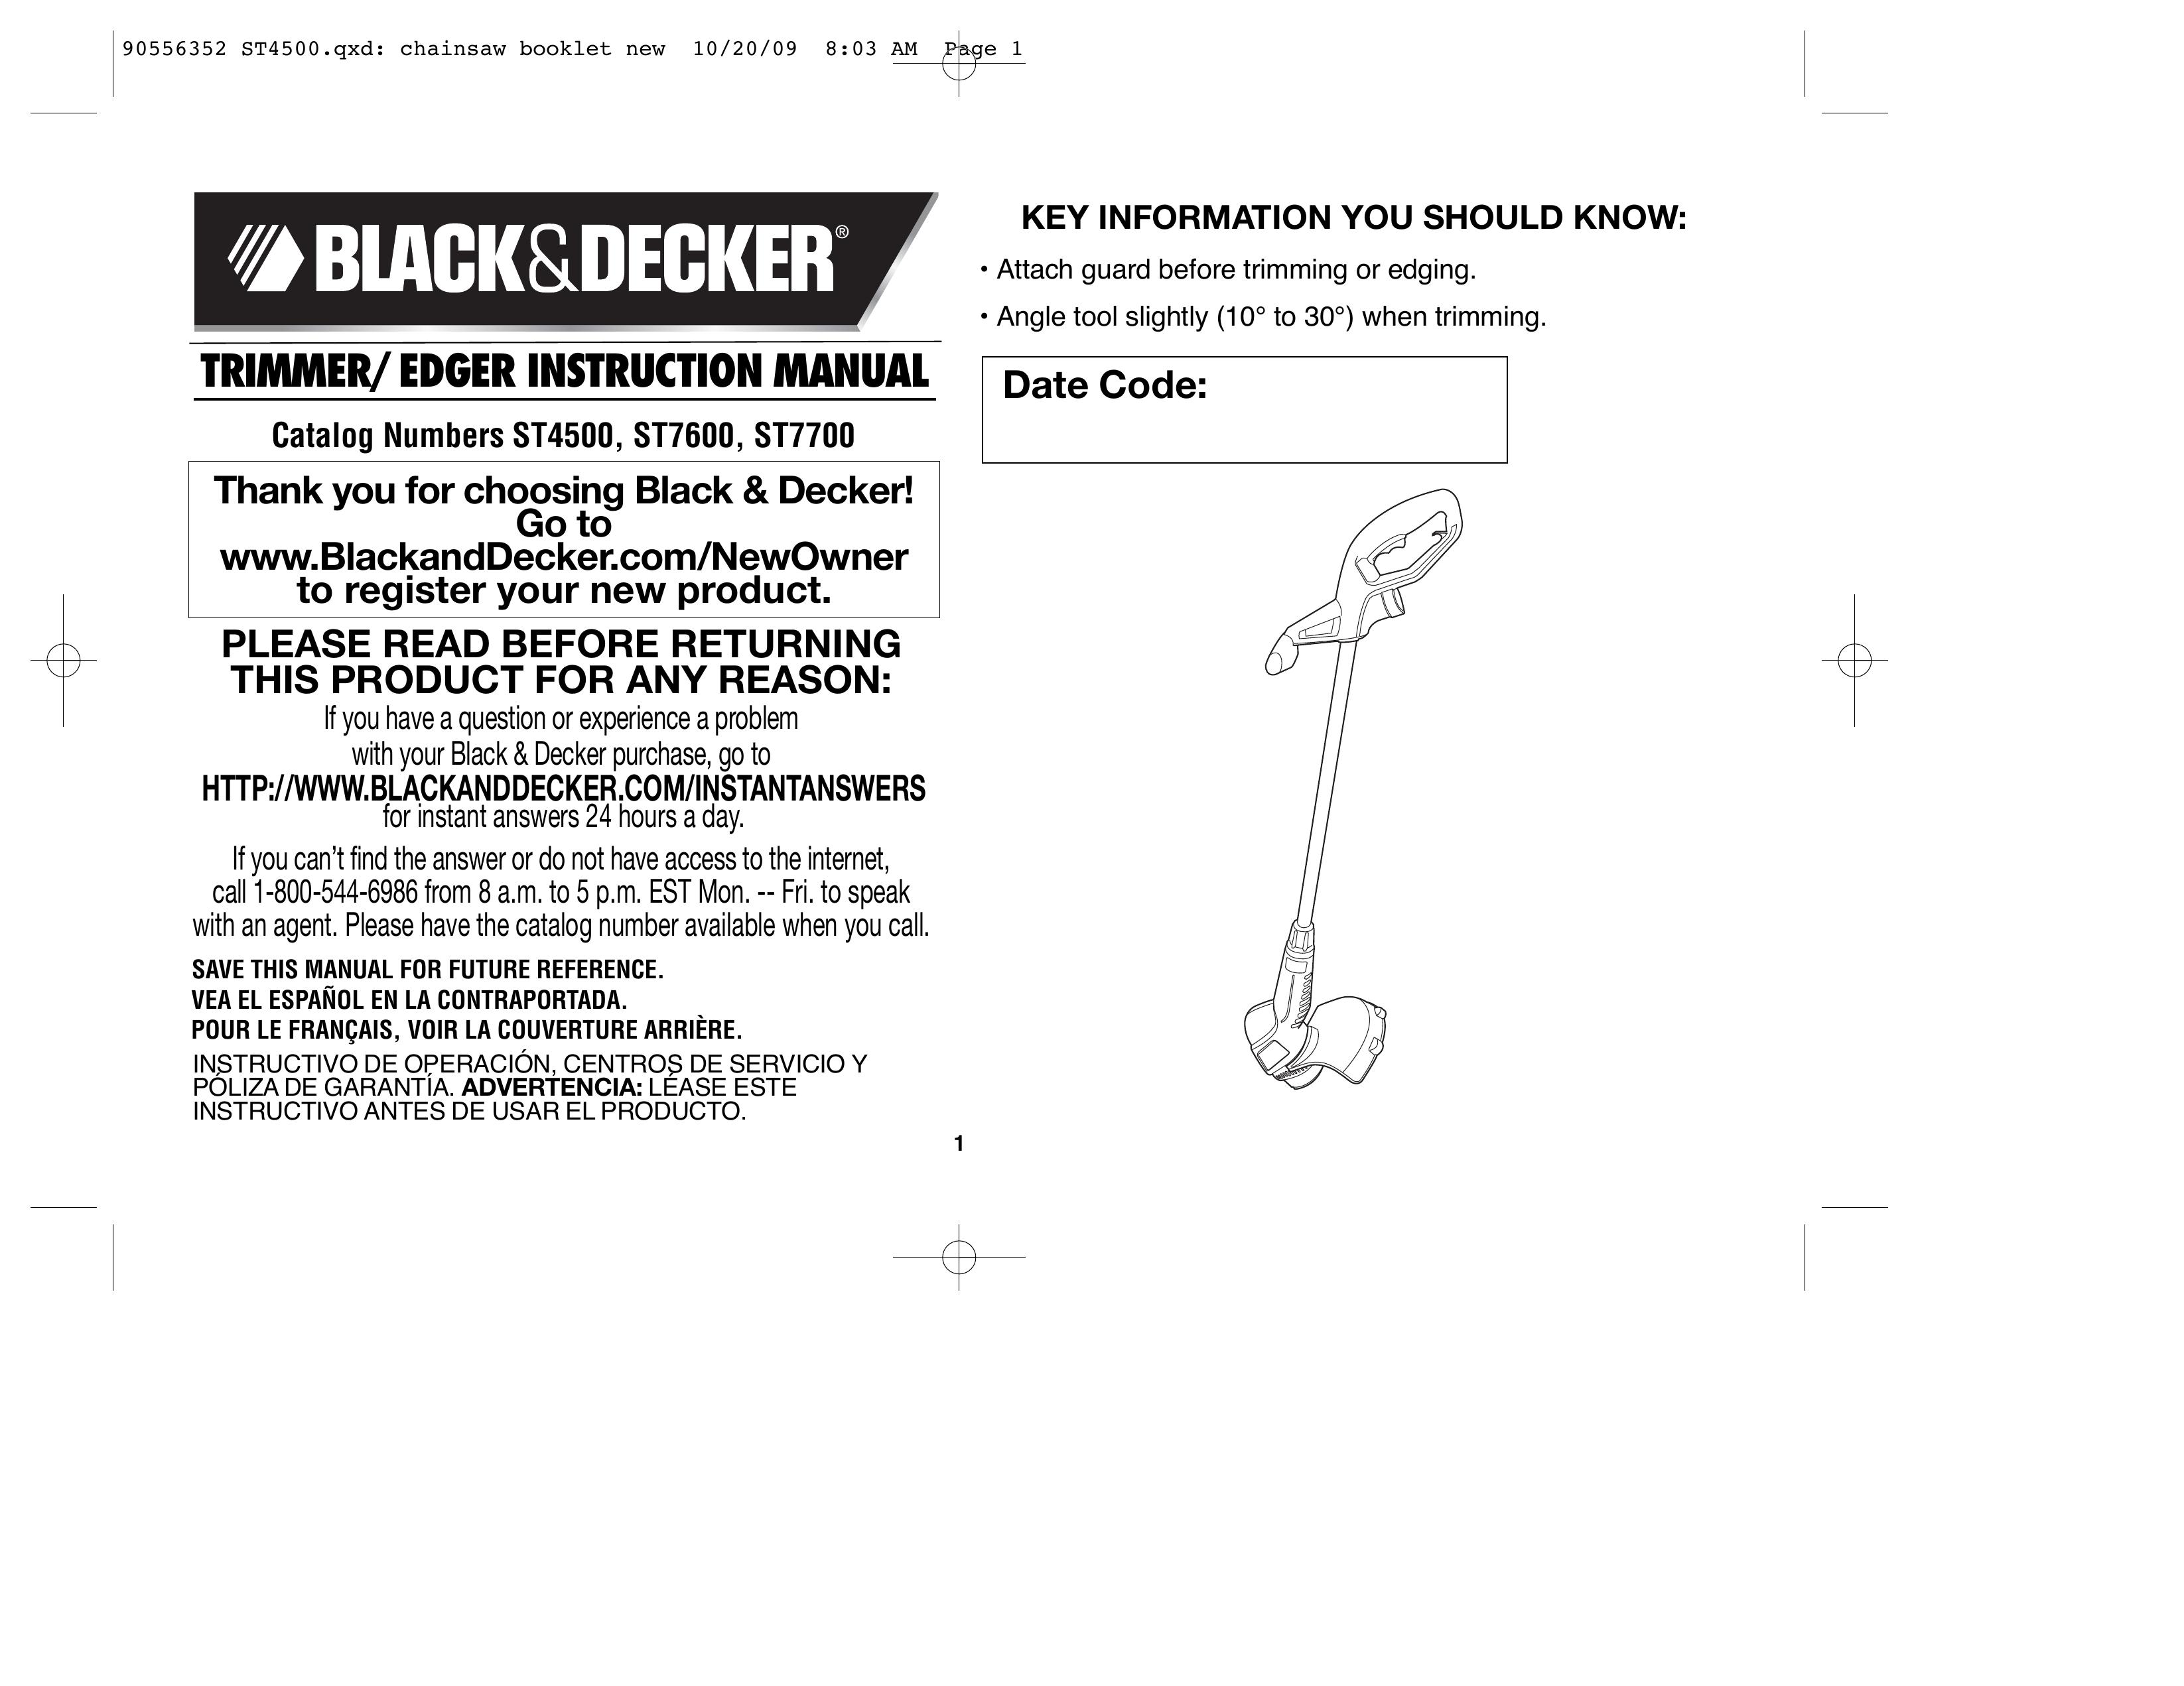 Black & Decker 90556352 Trimmer User Manual